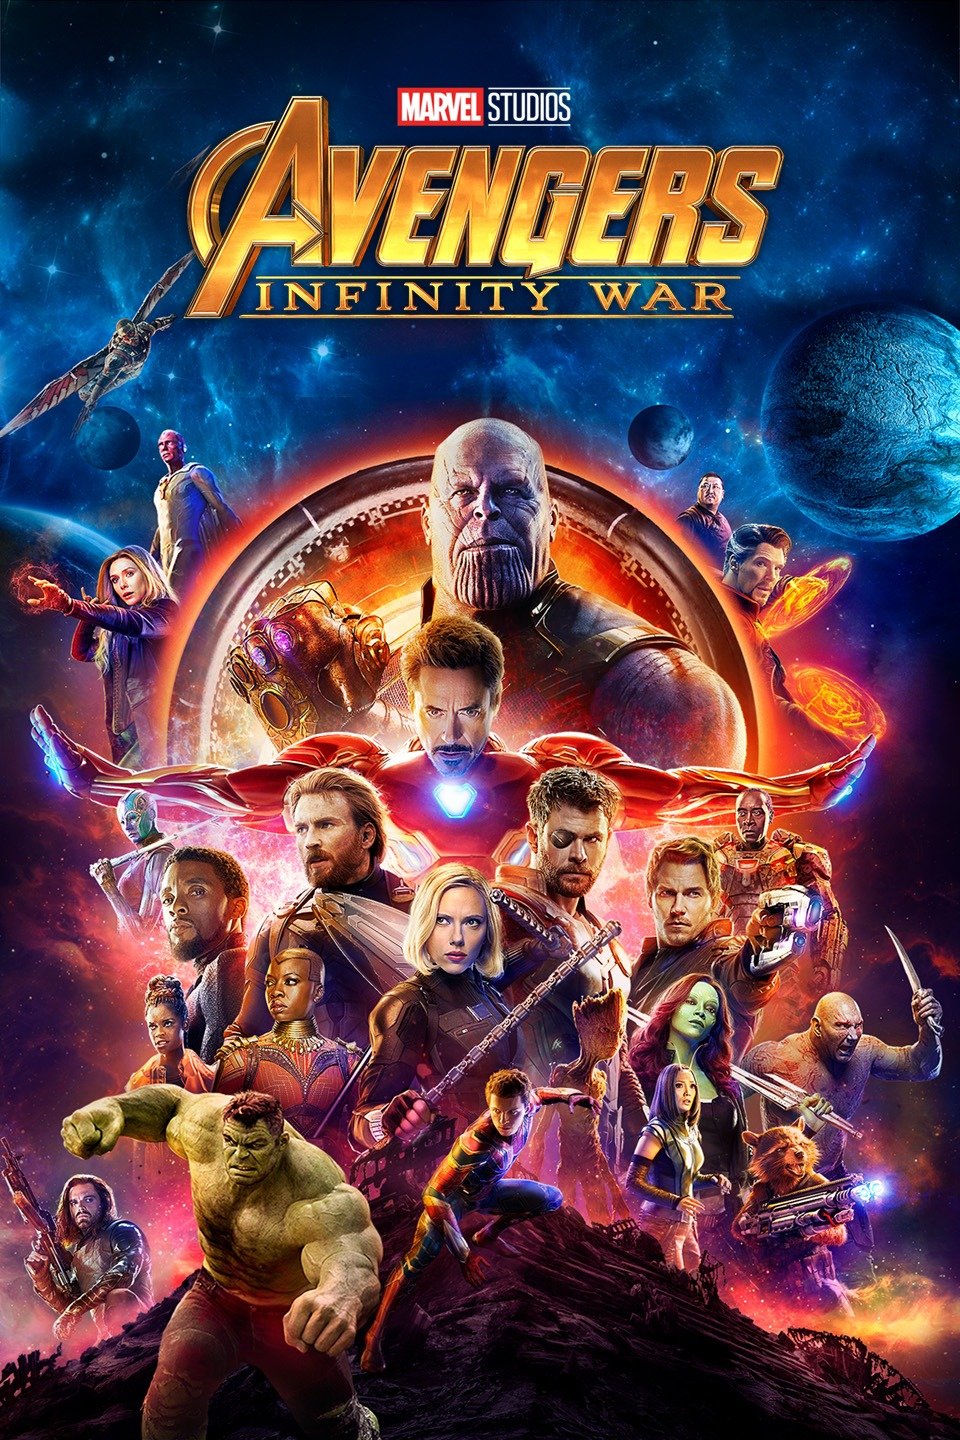 نقد فیلم Avengers: Infinity War - اونجرز: جنگ اینفینیتی